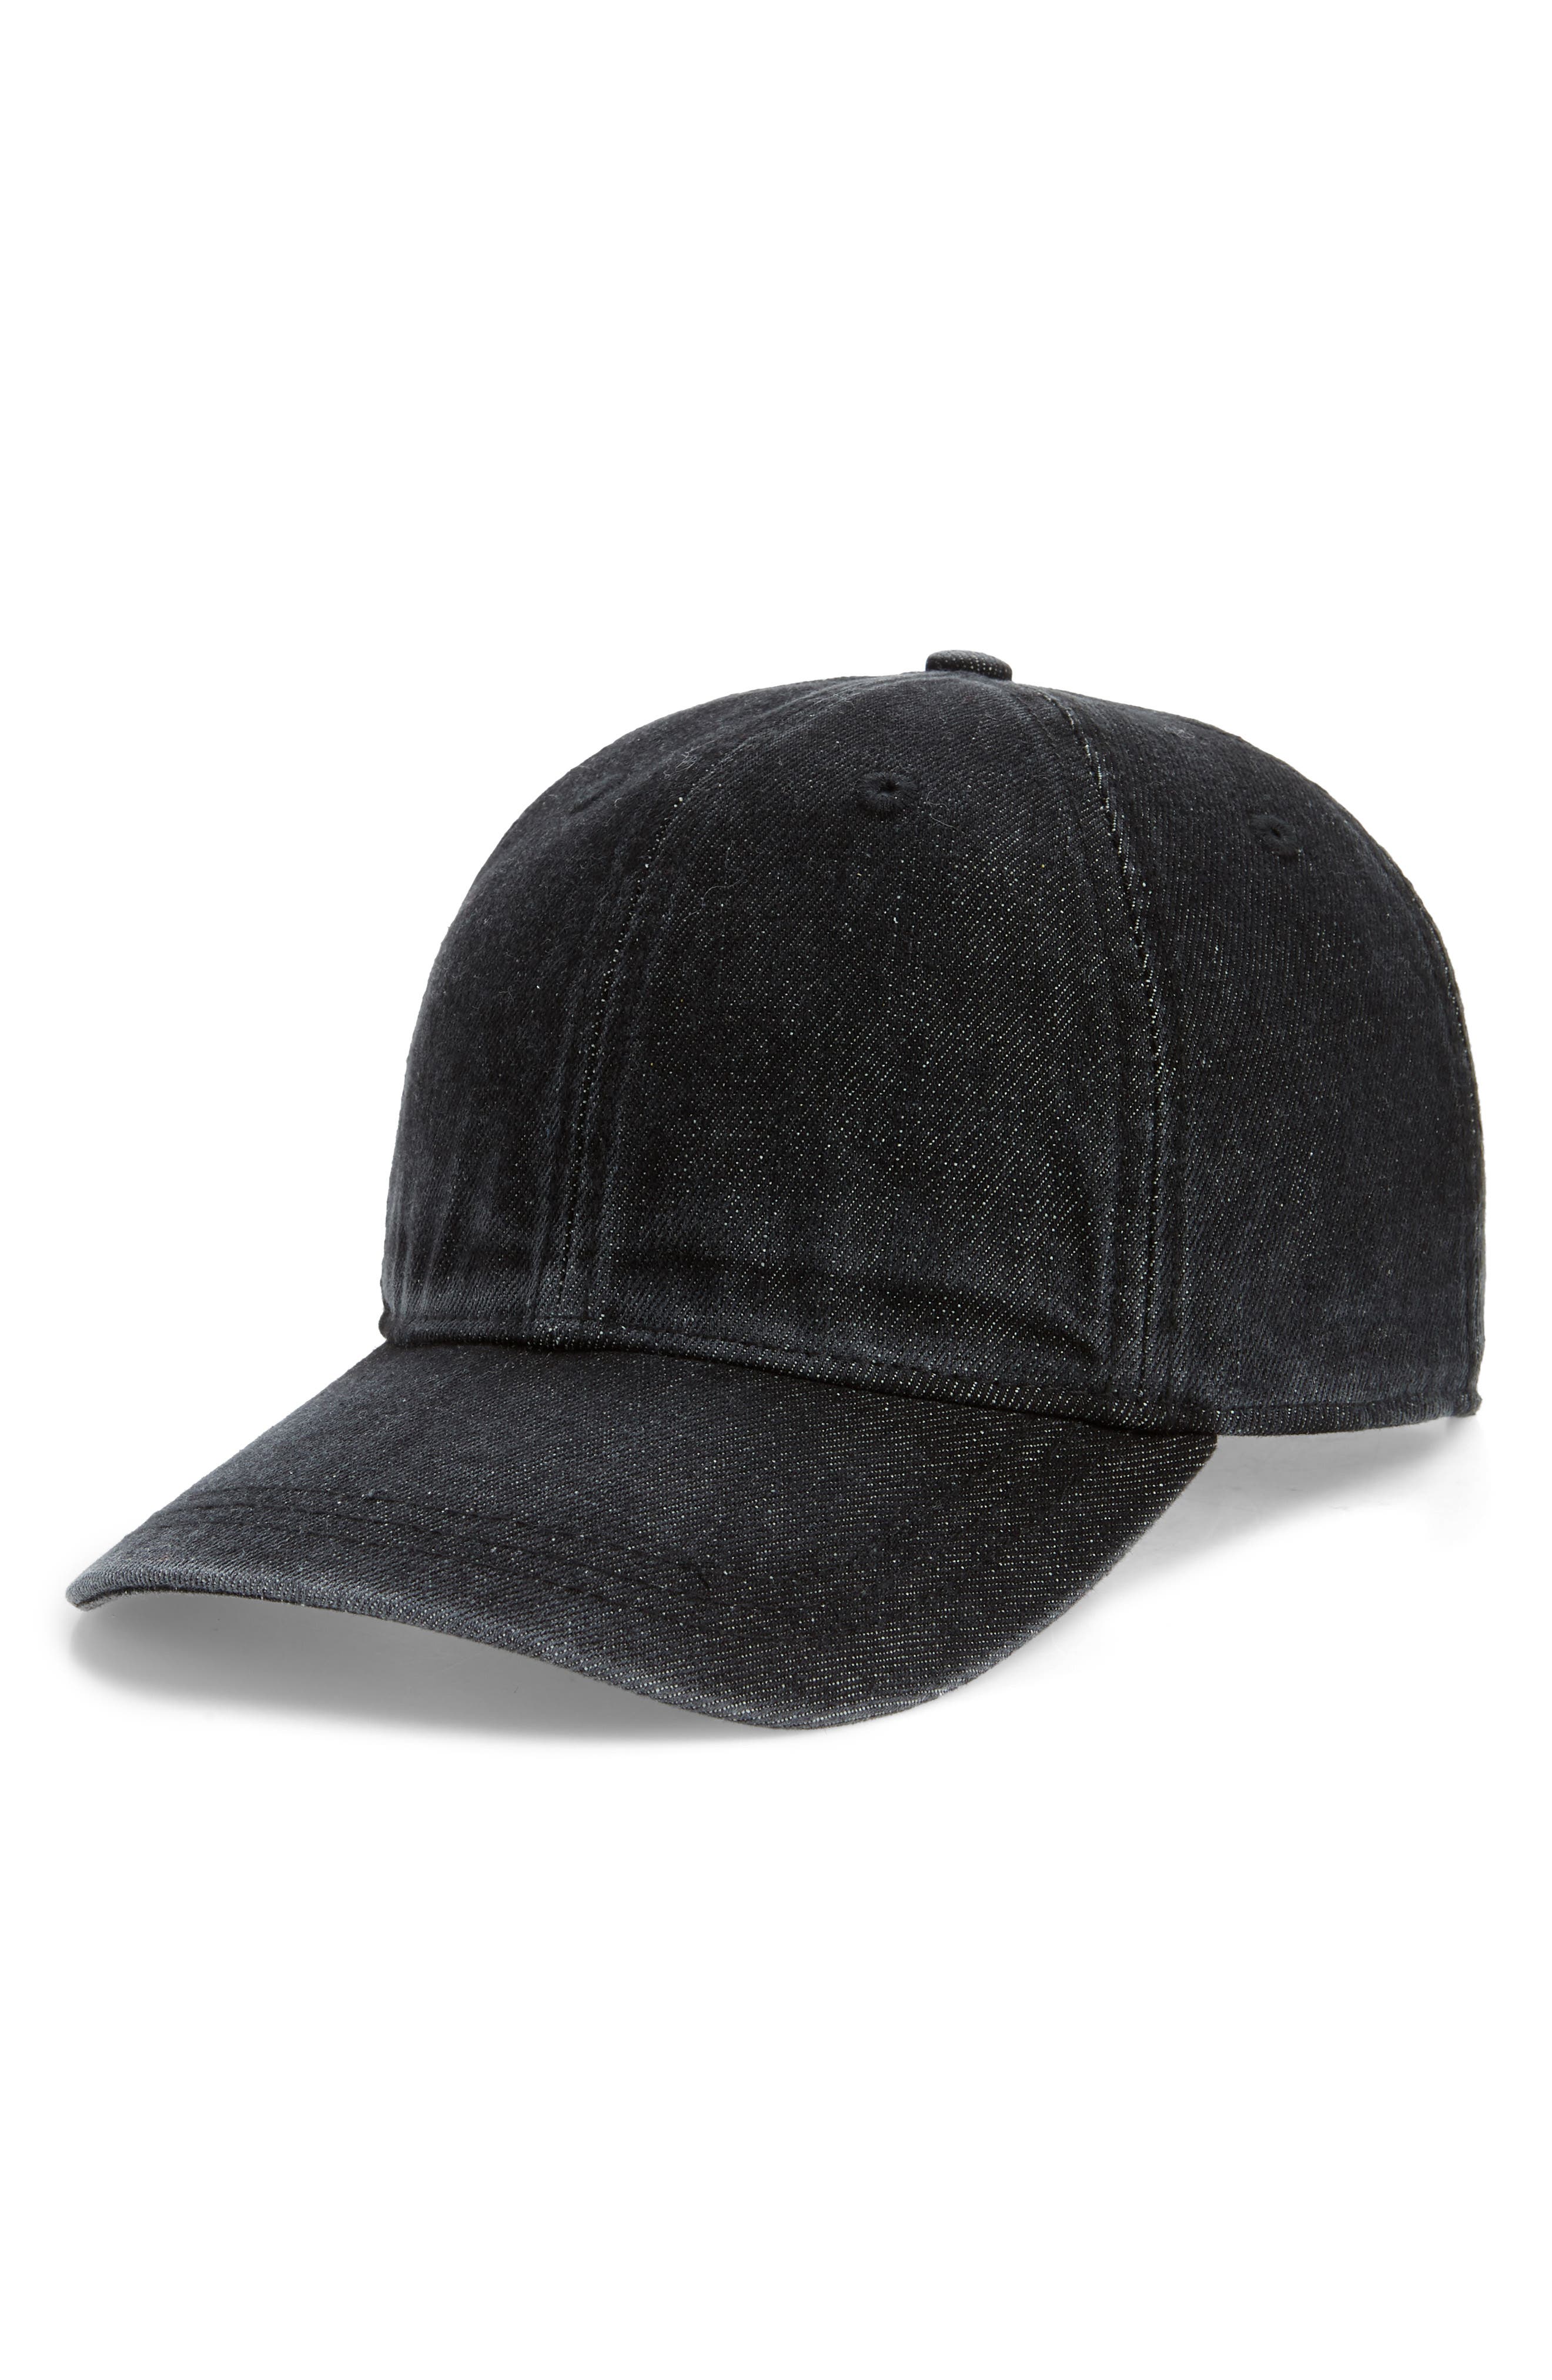 black denim baseball cap